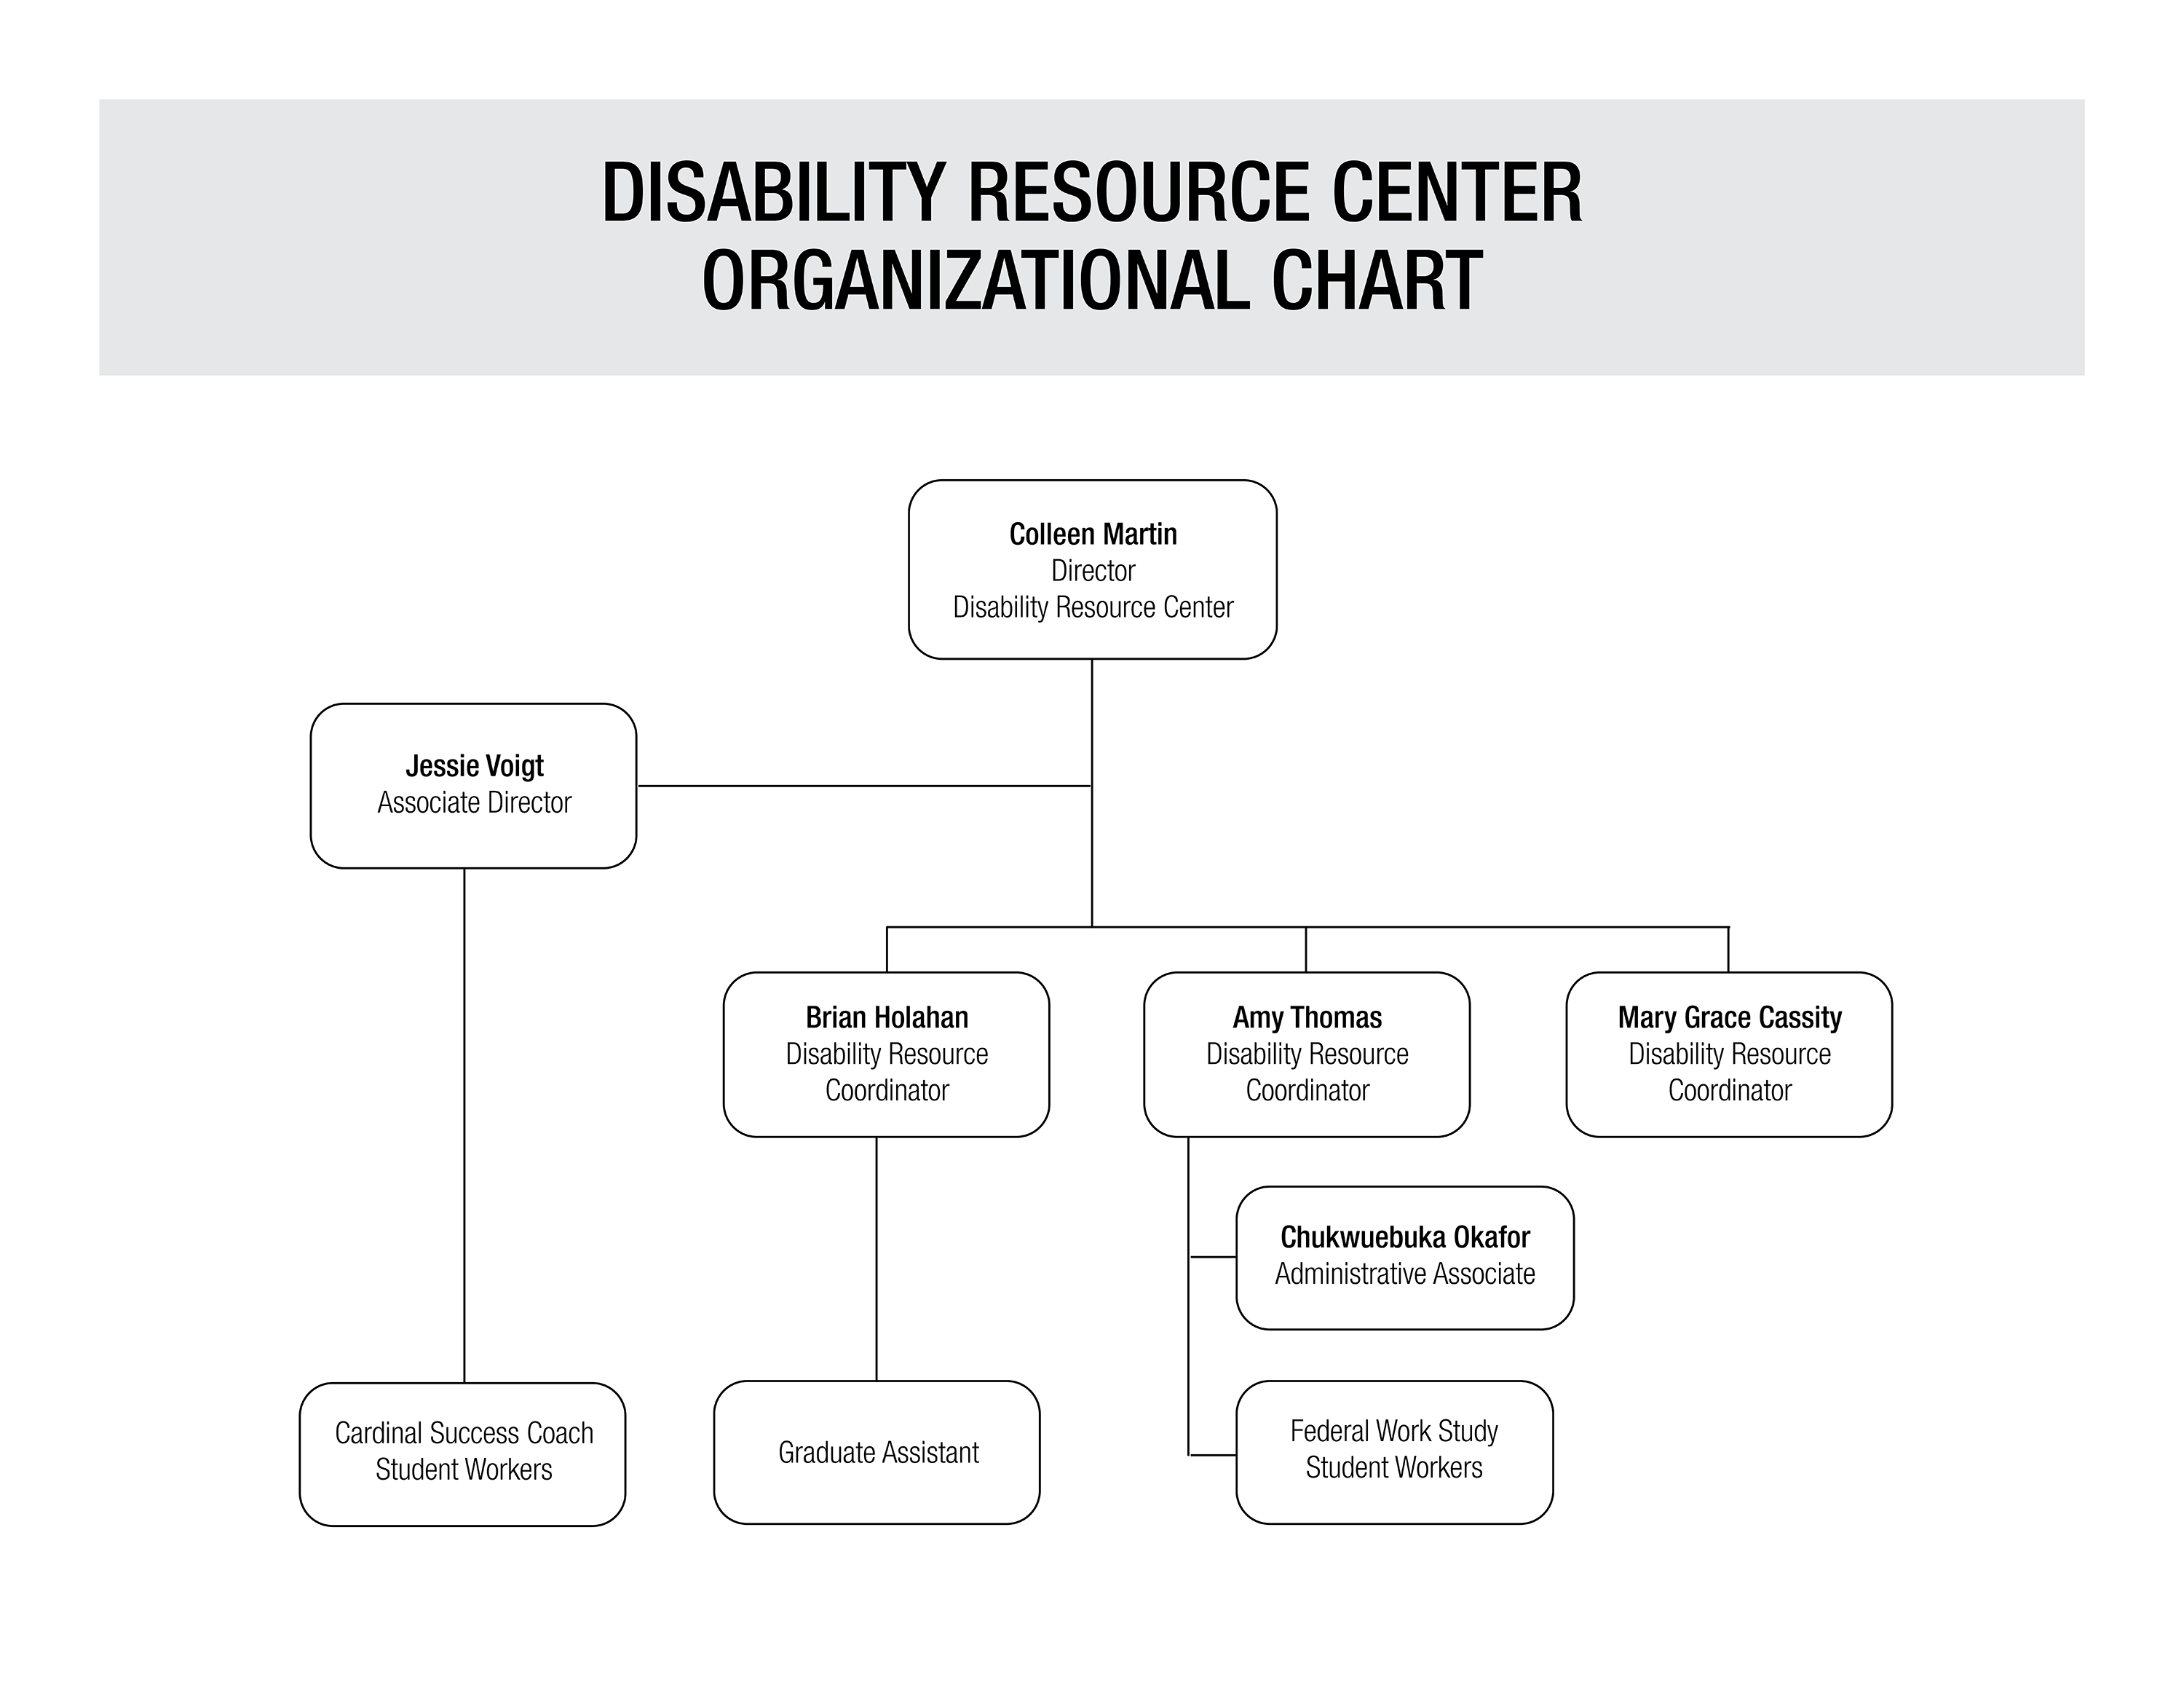 University of Louisville Office of Counseling Center Organizational chart